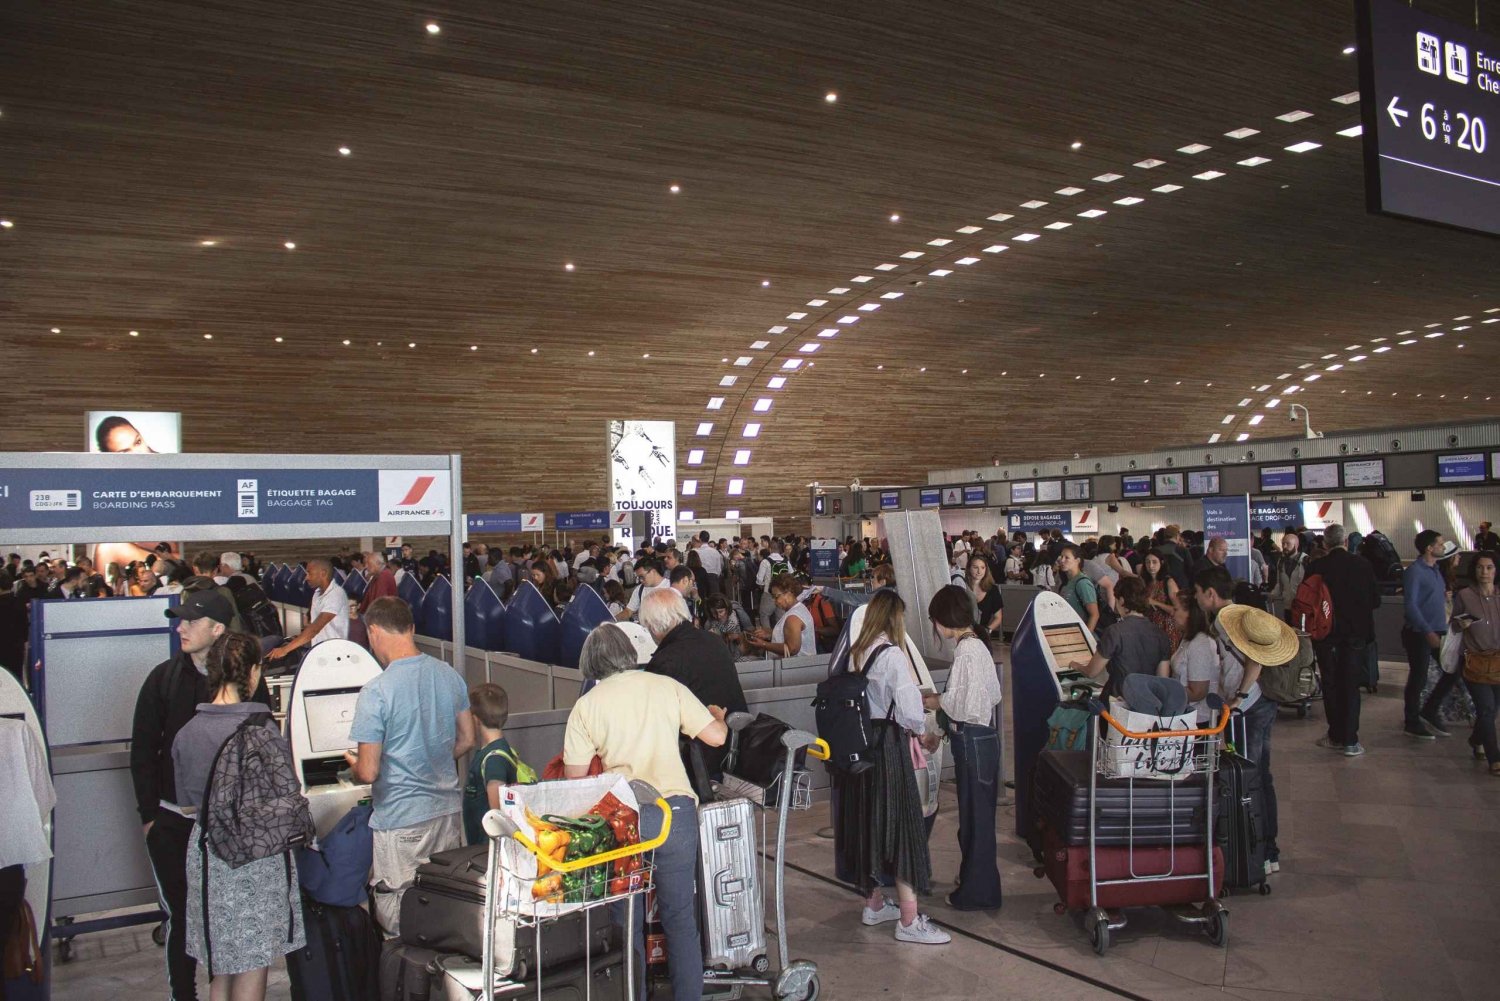 Monachium: Asystent Meet & Greet na lotnisku